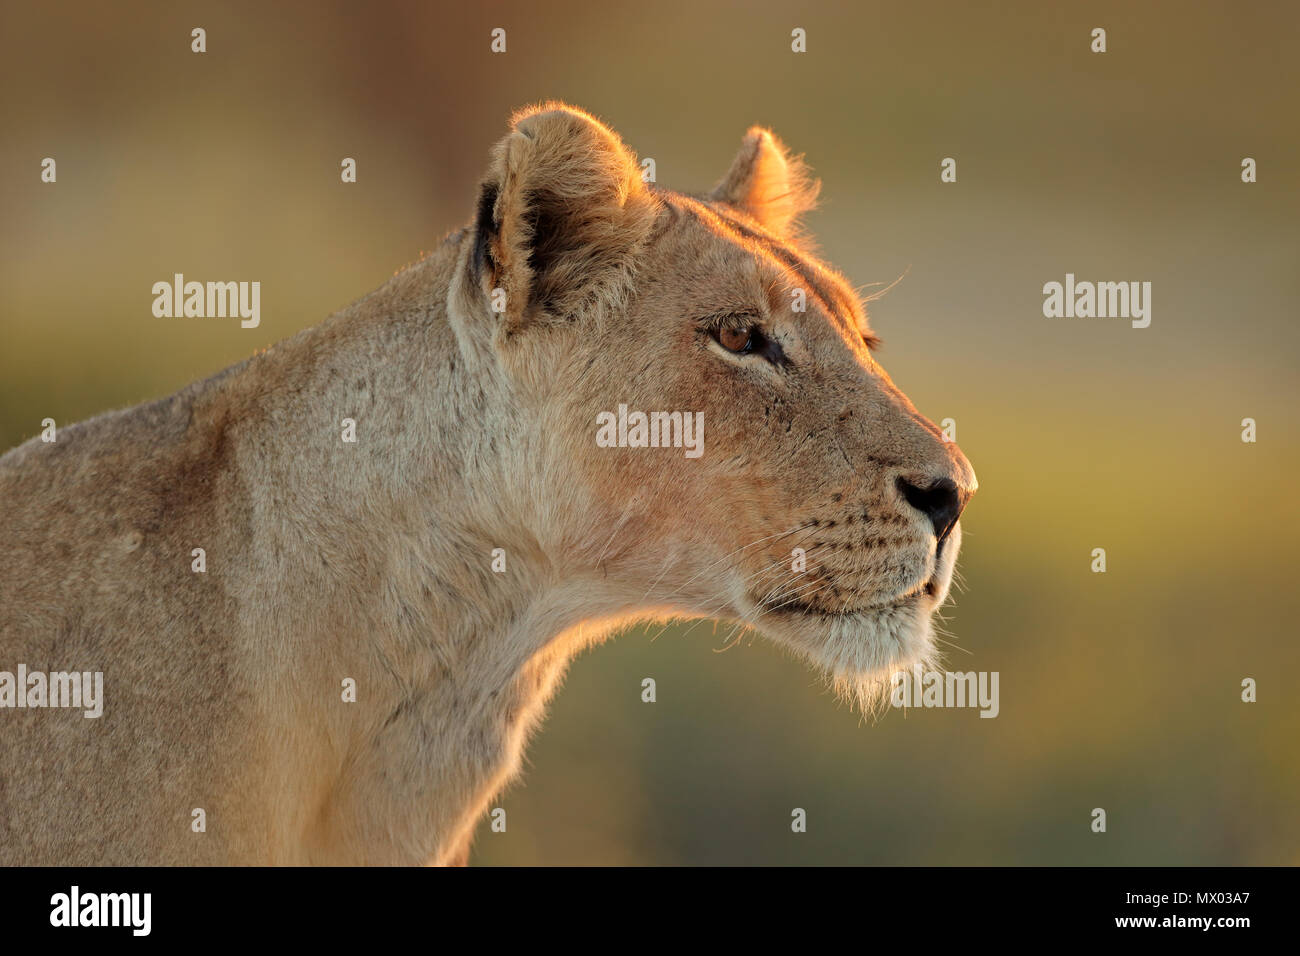 Ritratto di una leonessa africana (Panthera leo), Deserto Kalahari, Sud Africa Foto Stock